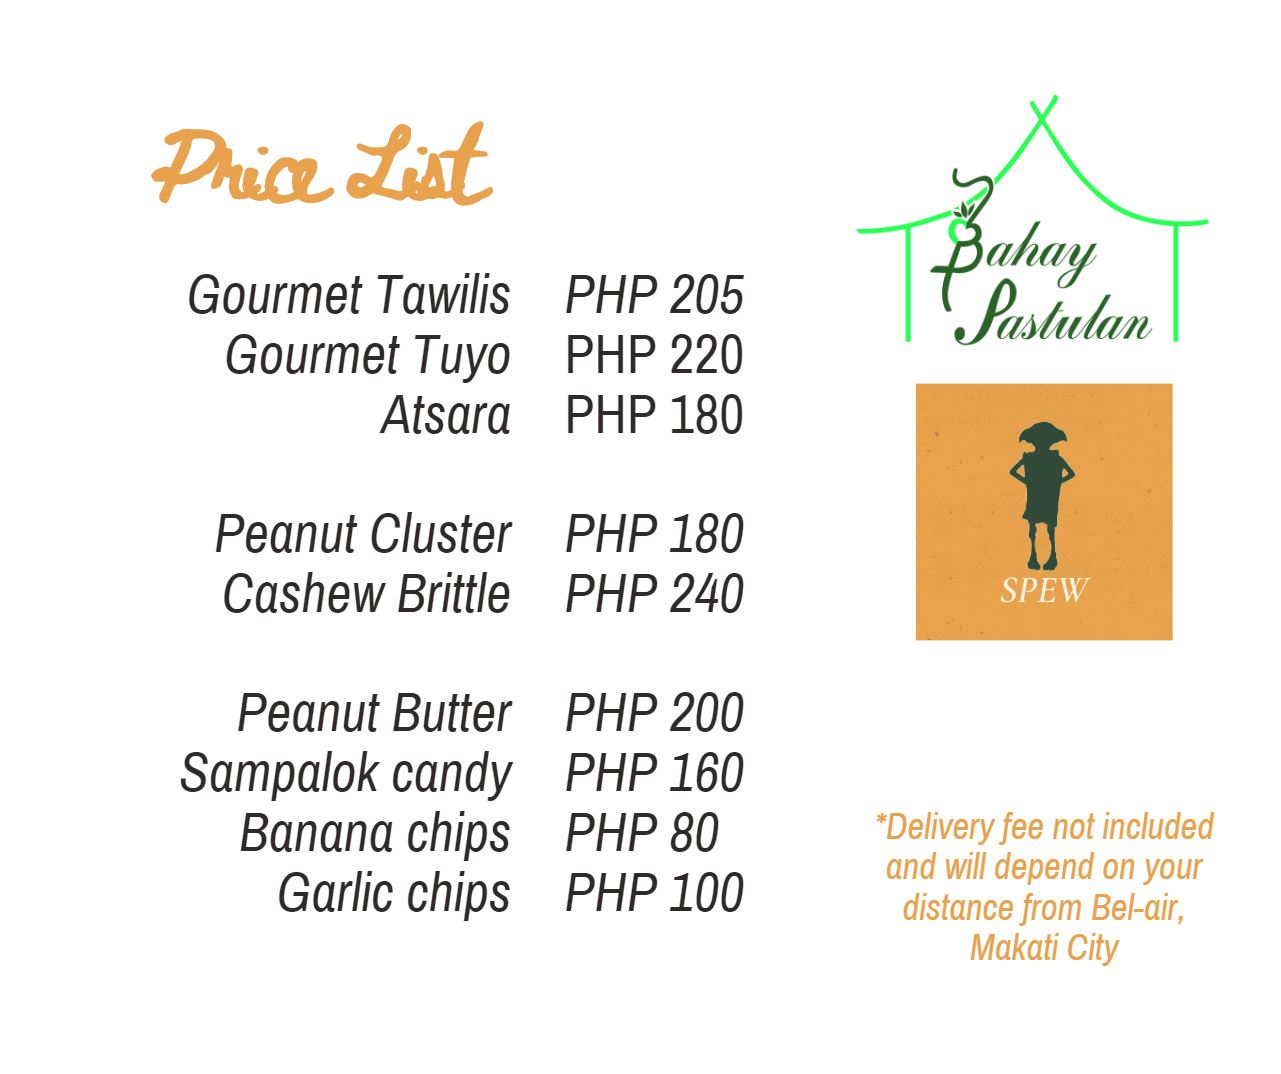 Good Shepherd Sisters’ Bahay Pastulan Tagaytay price list